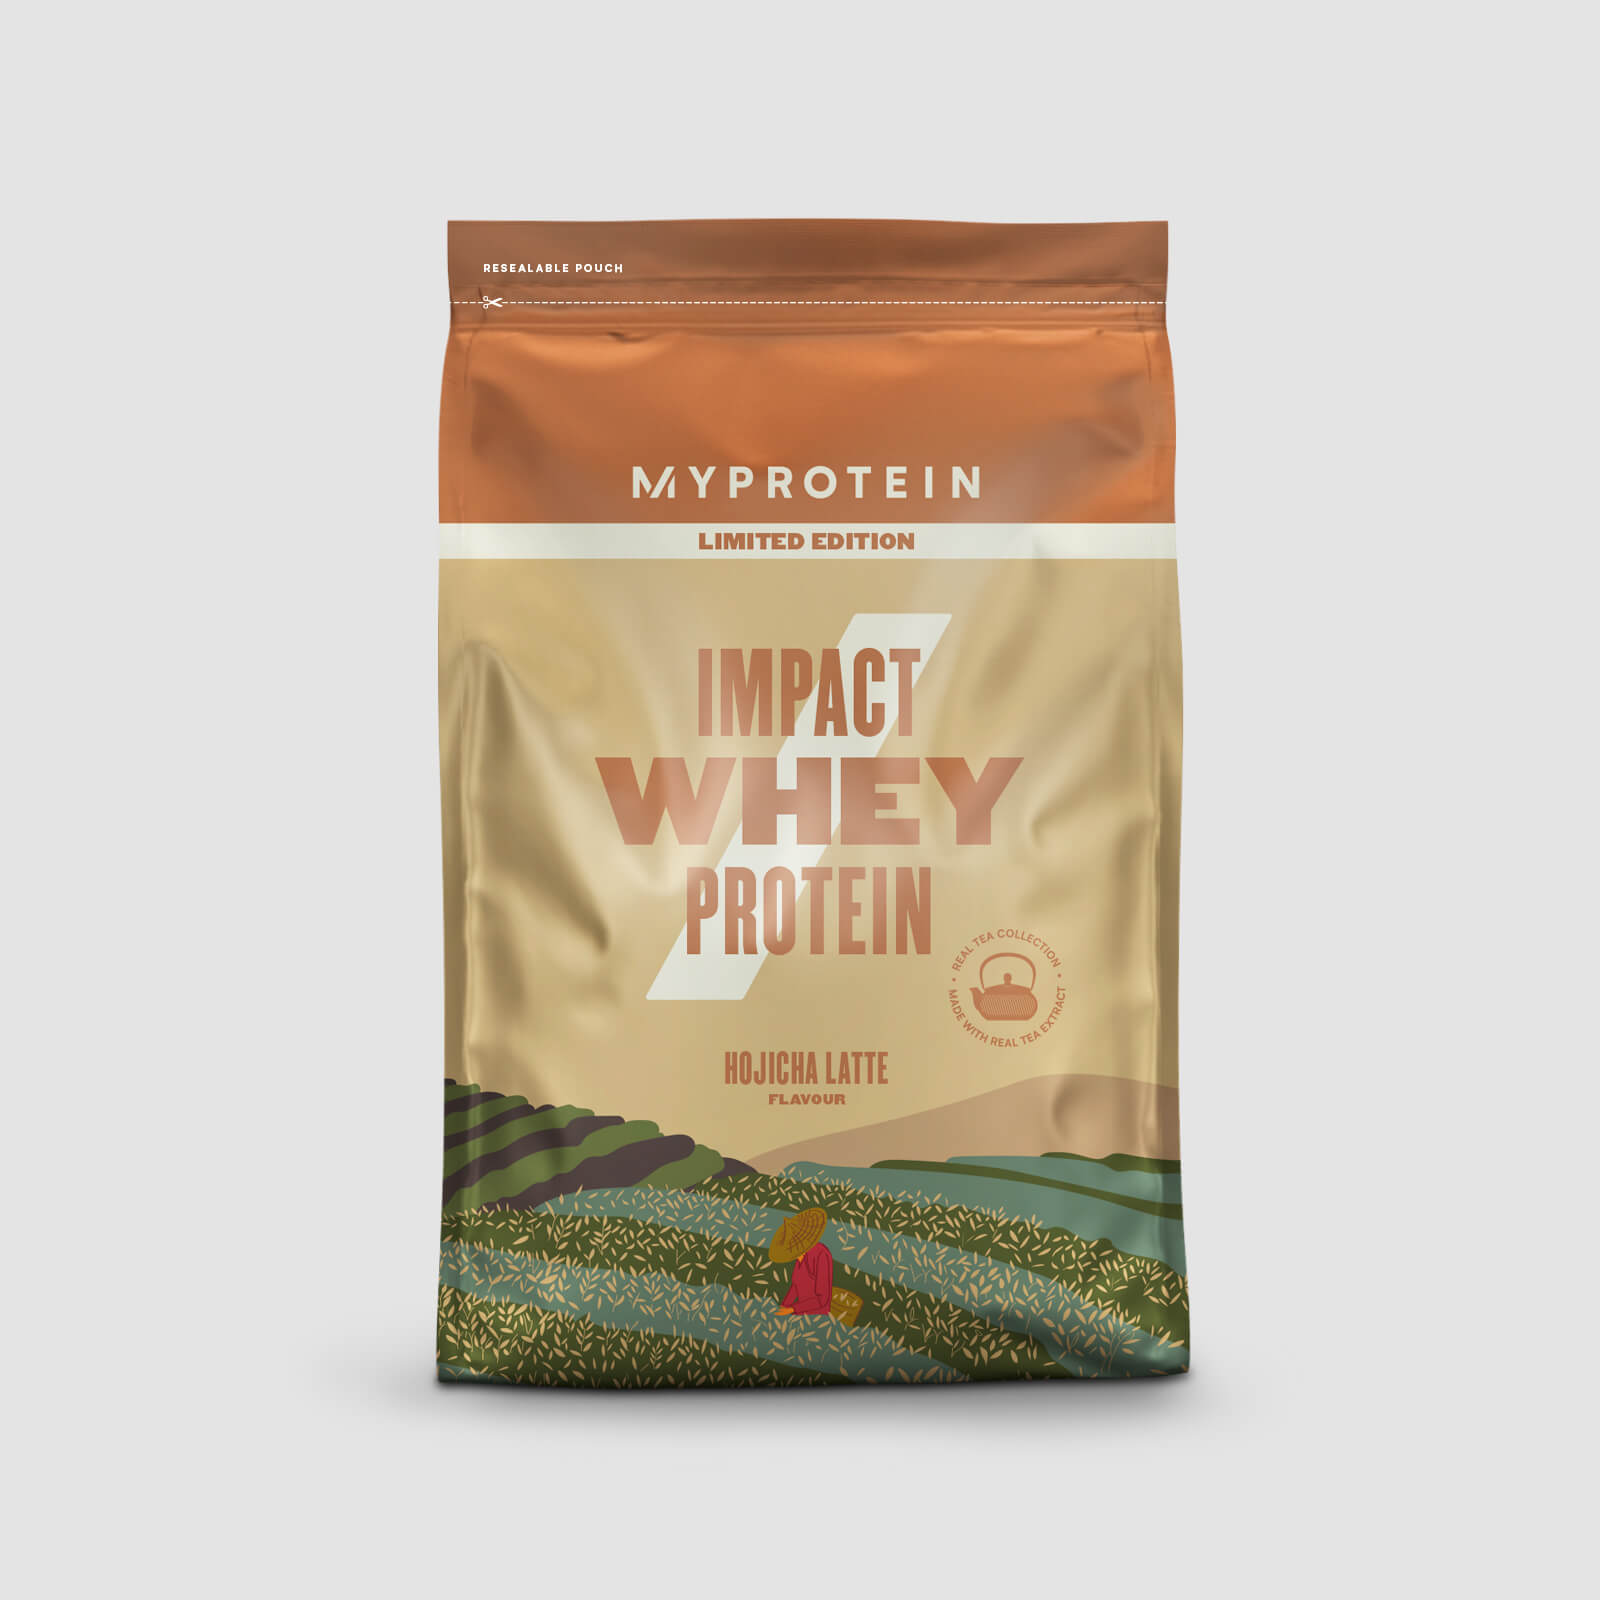 Impact Whey Protein Powder - 1kg - Hojicha